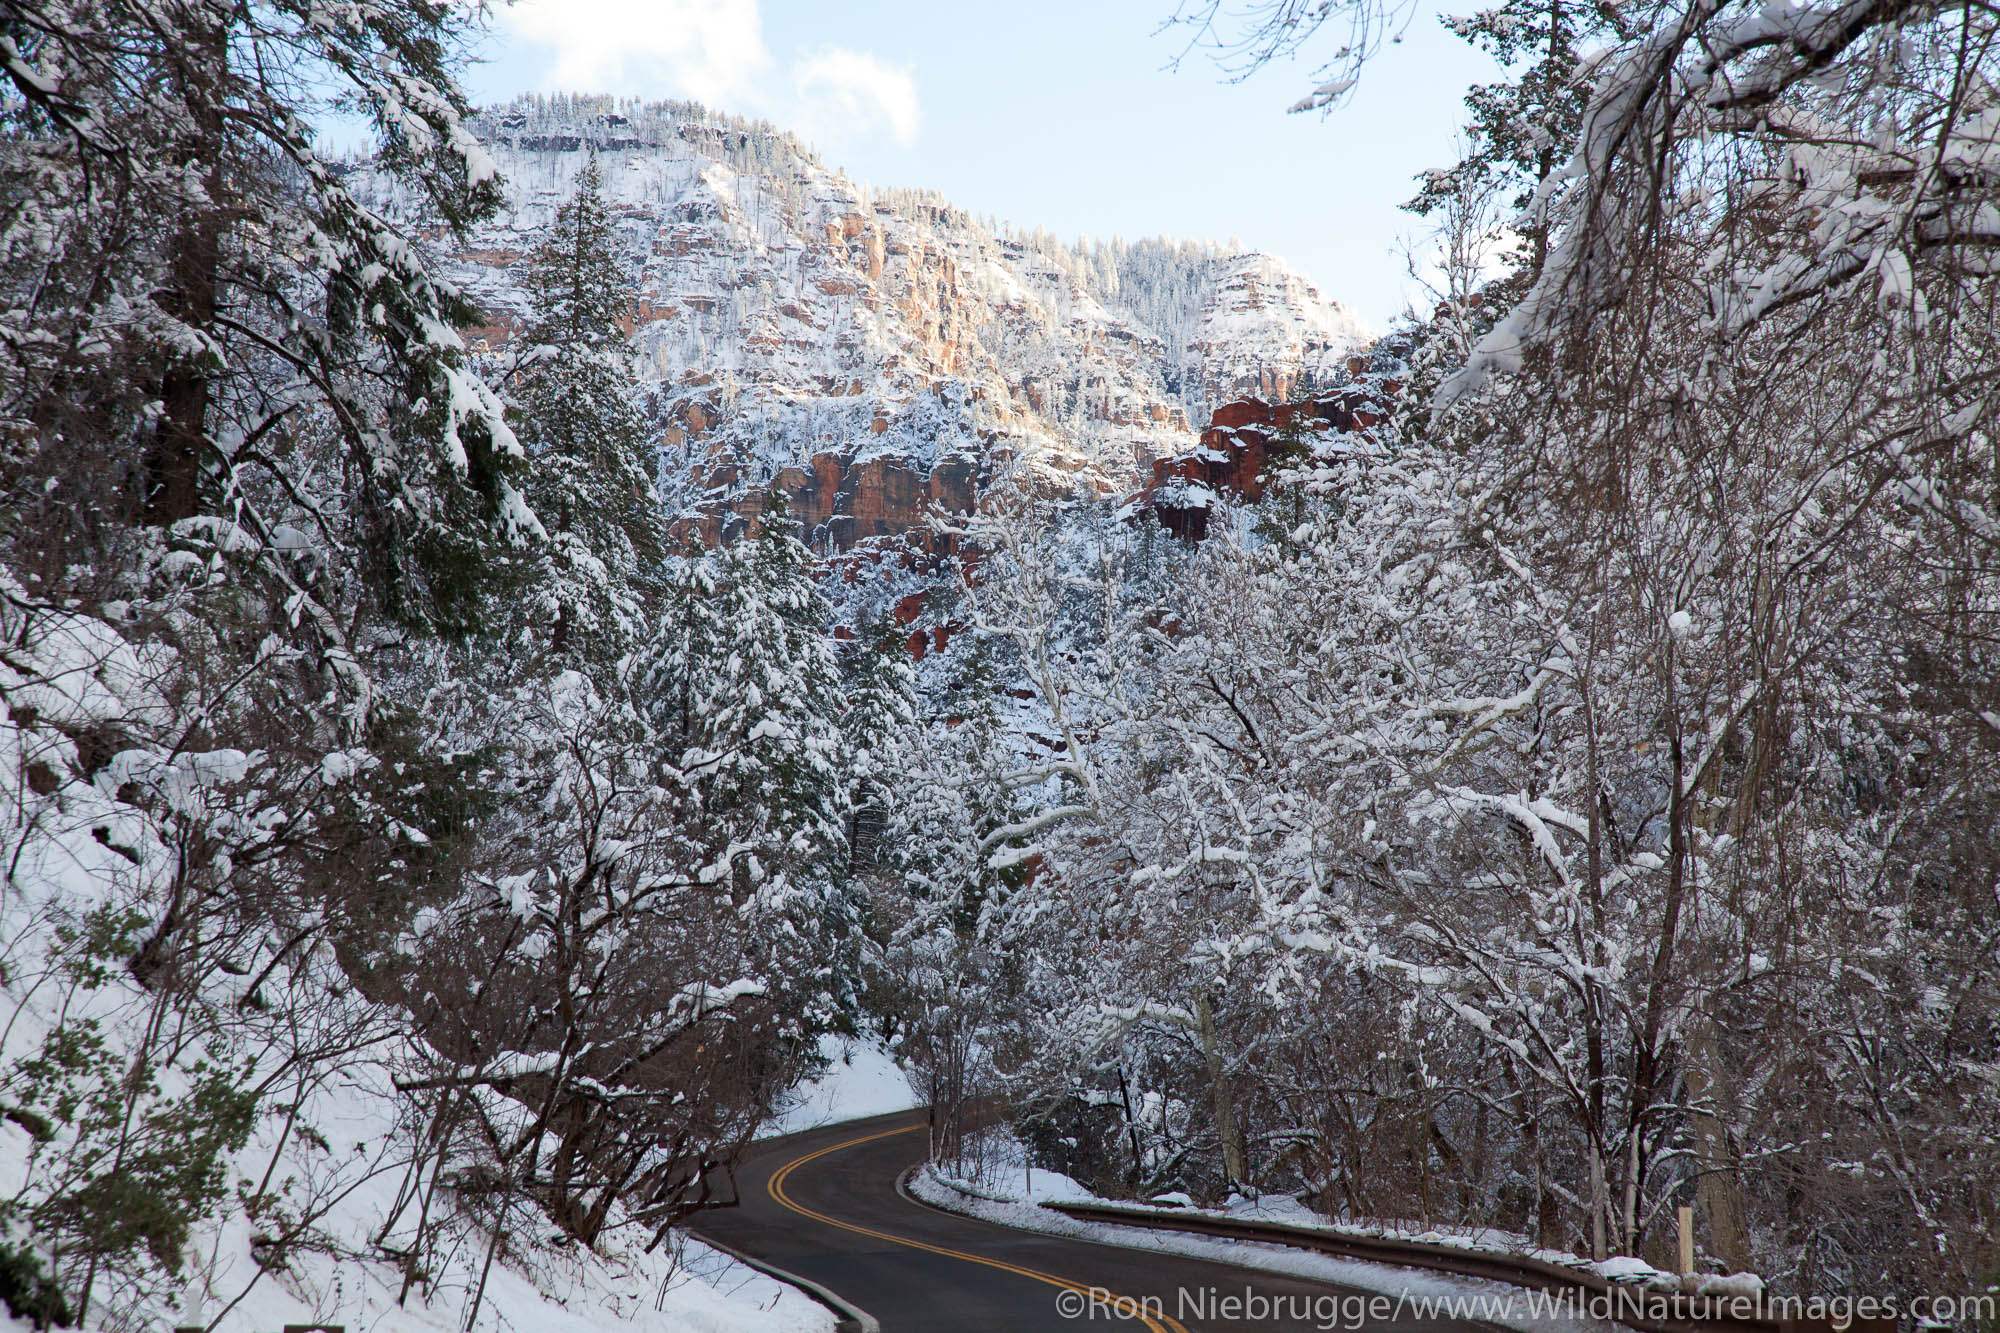 Winter snow along Oak Creek Canyon and Highway 89A, Sedona, Arizona.